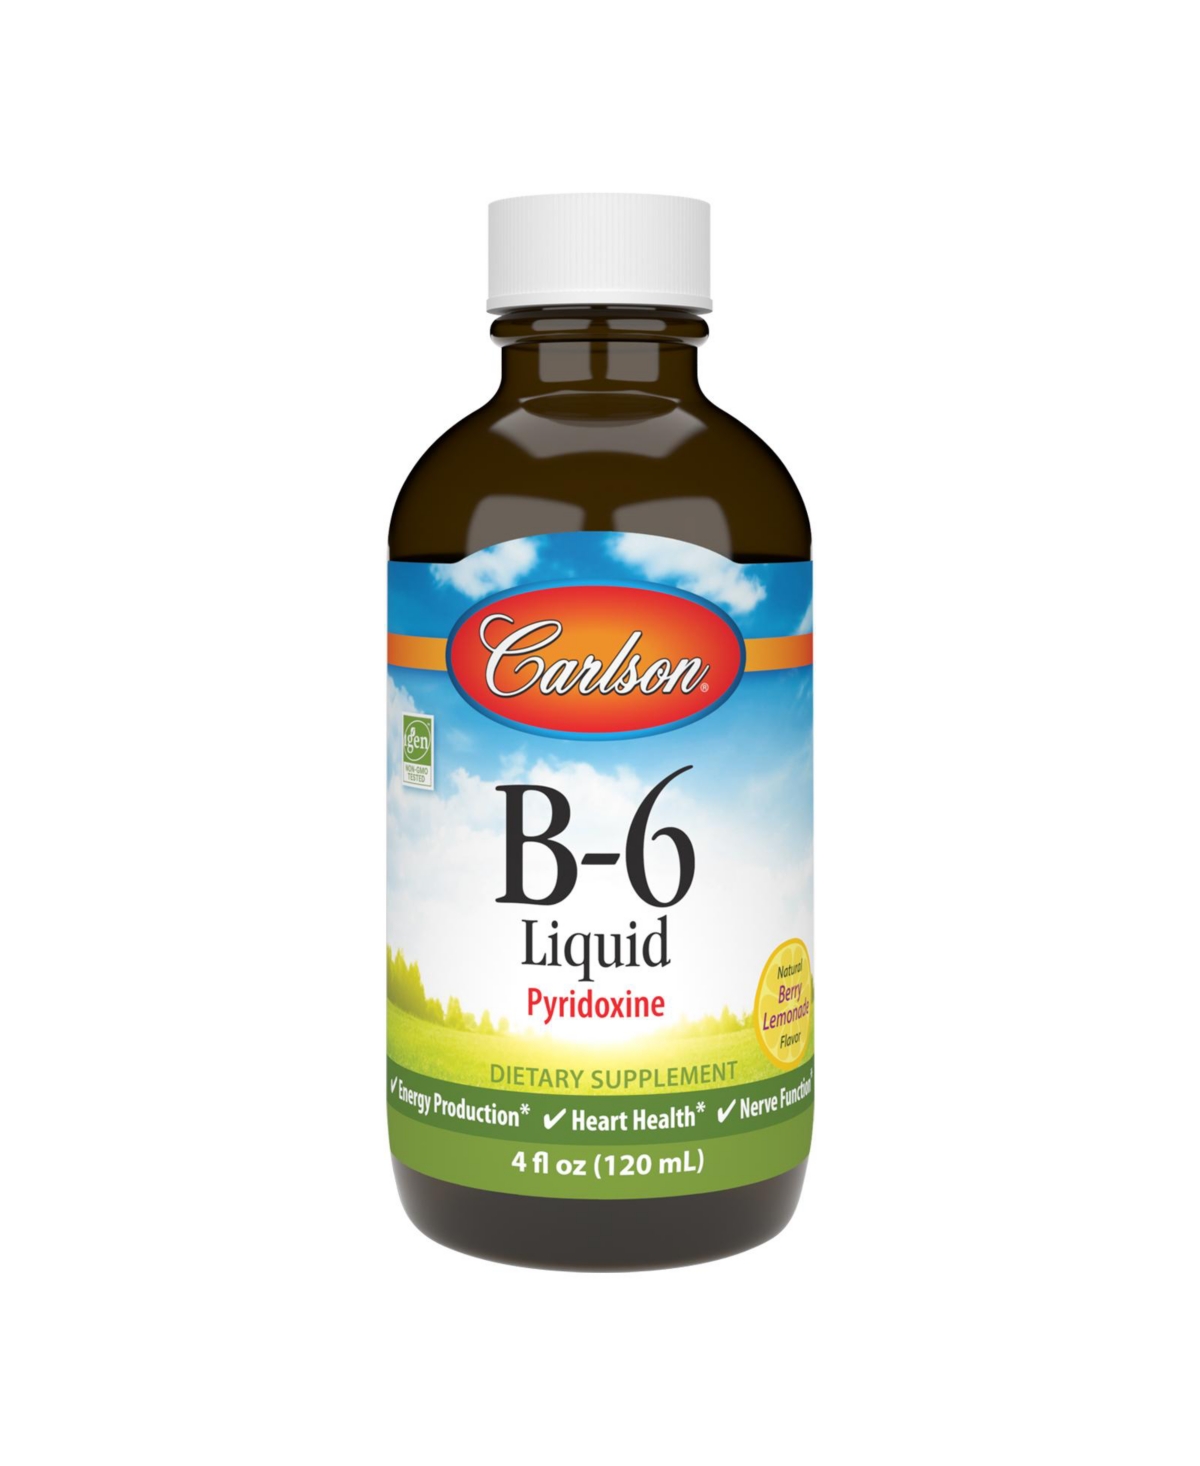 Carlson - B-6 Liquid, Vitamin B-6, Energy Production, Heart Health, Berry Lemonade Flavor, 120 mL (4 Fl Oz) - Assorted Pre-Pack